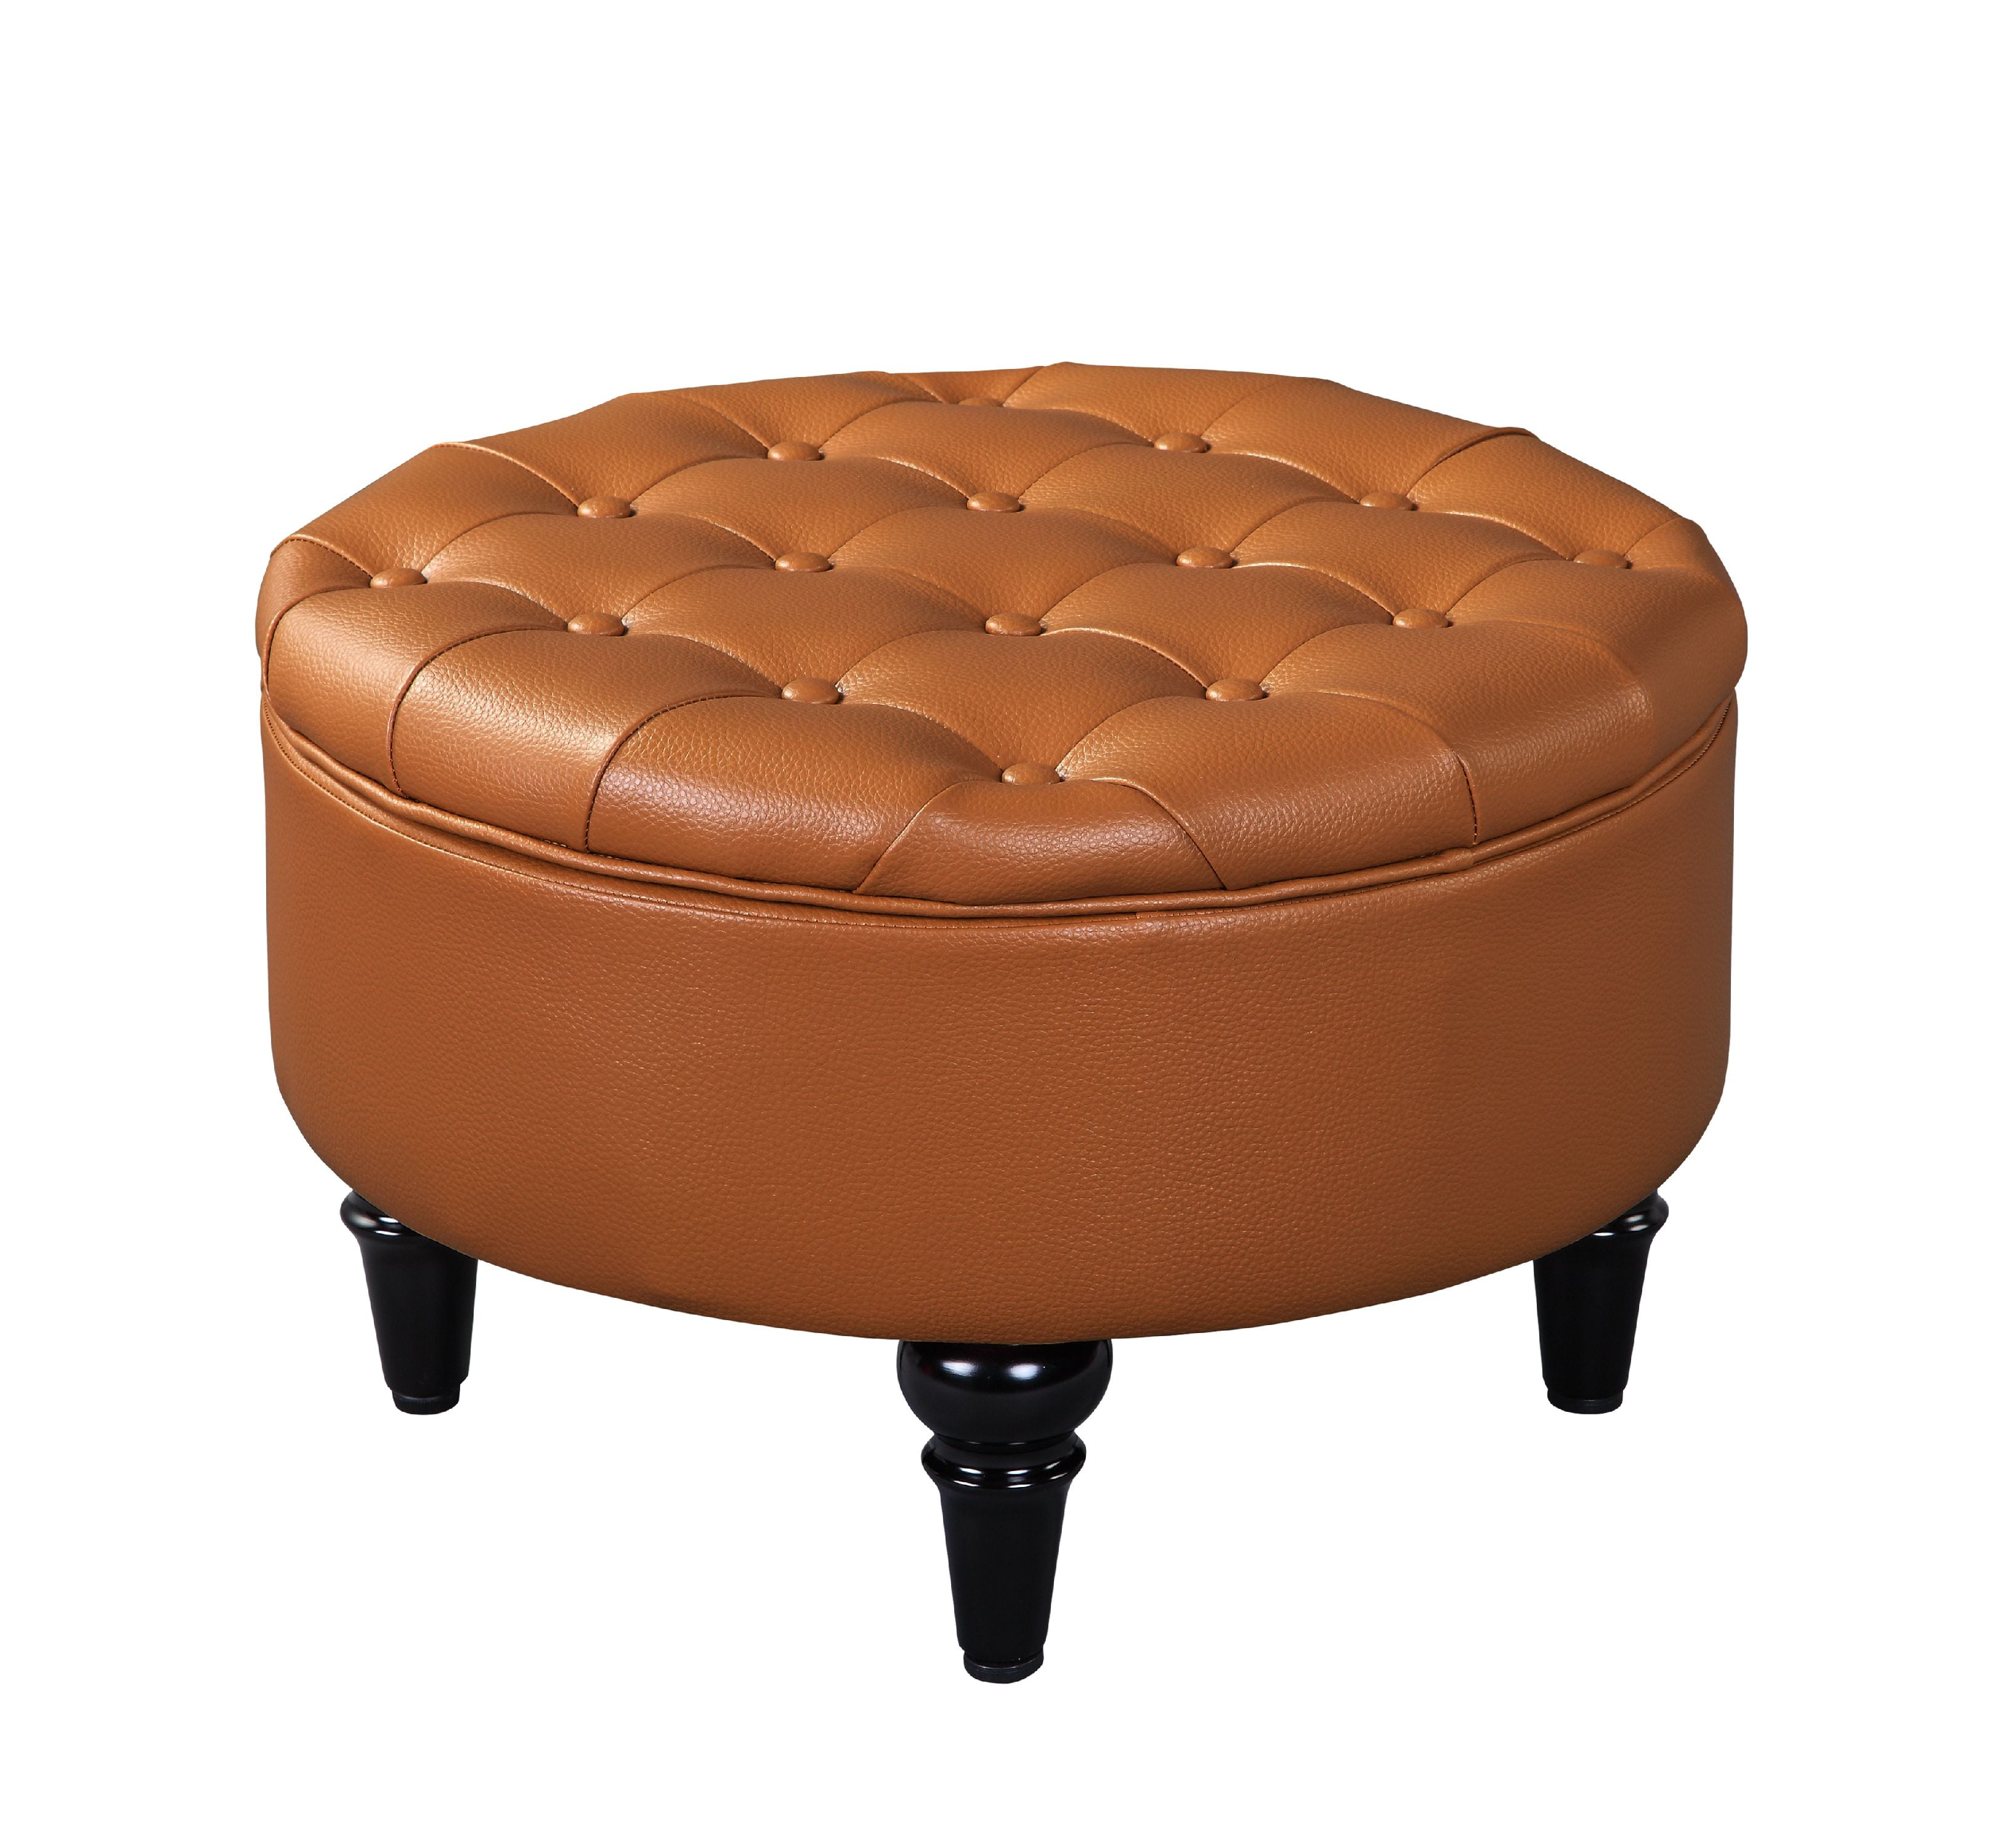 Round Storage Ottoman Footstool Brown, Round Leather Ottoman With Storage